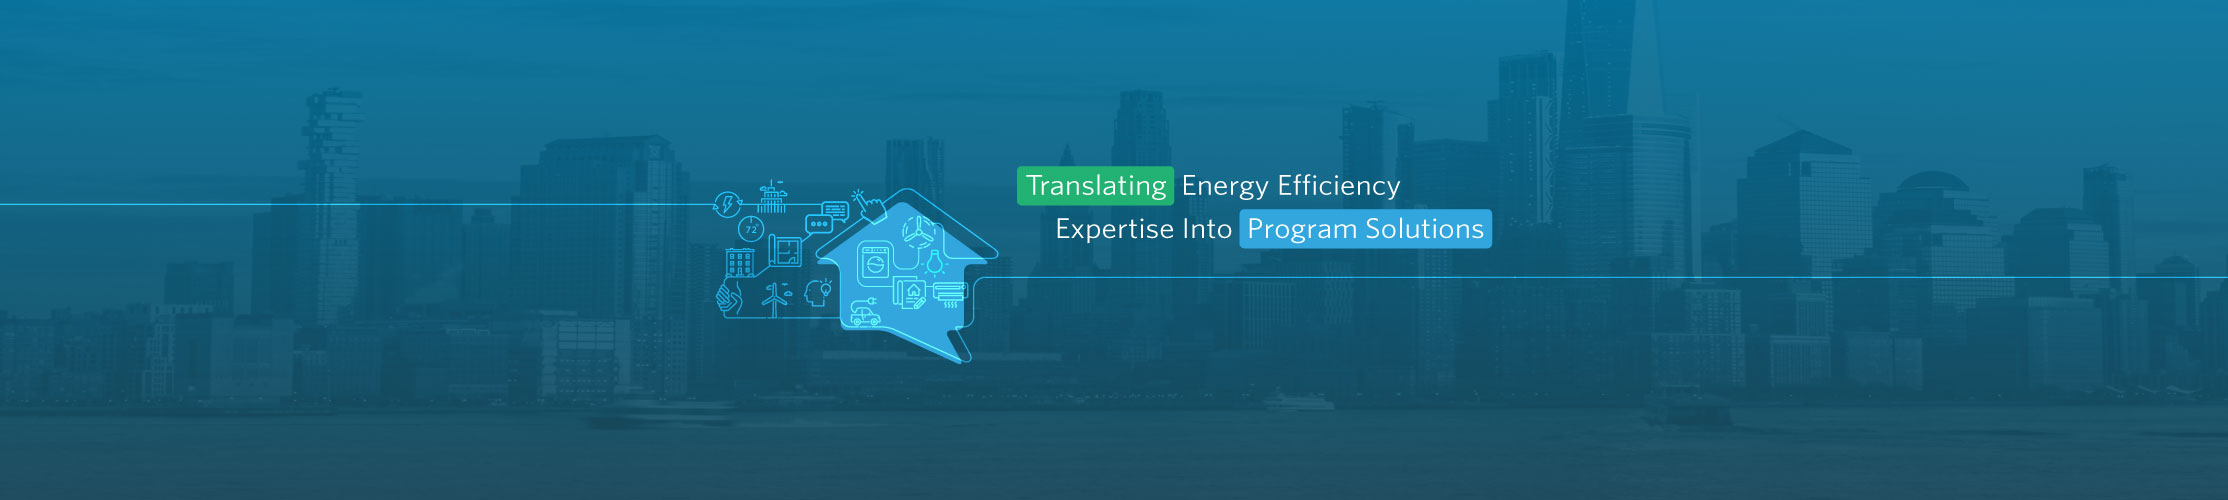 Translating Energy Efficiency Expertise into Program Solutions